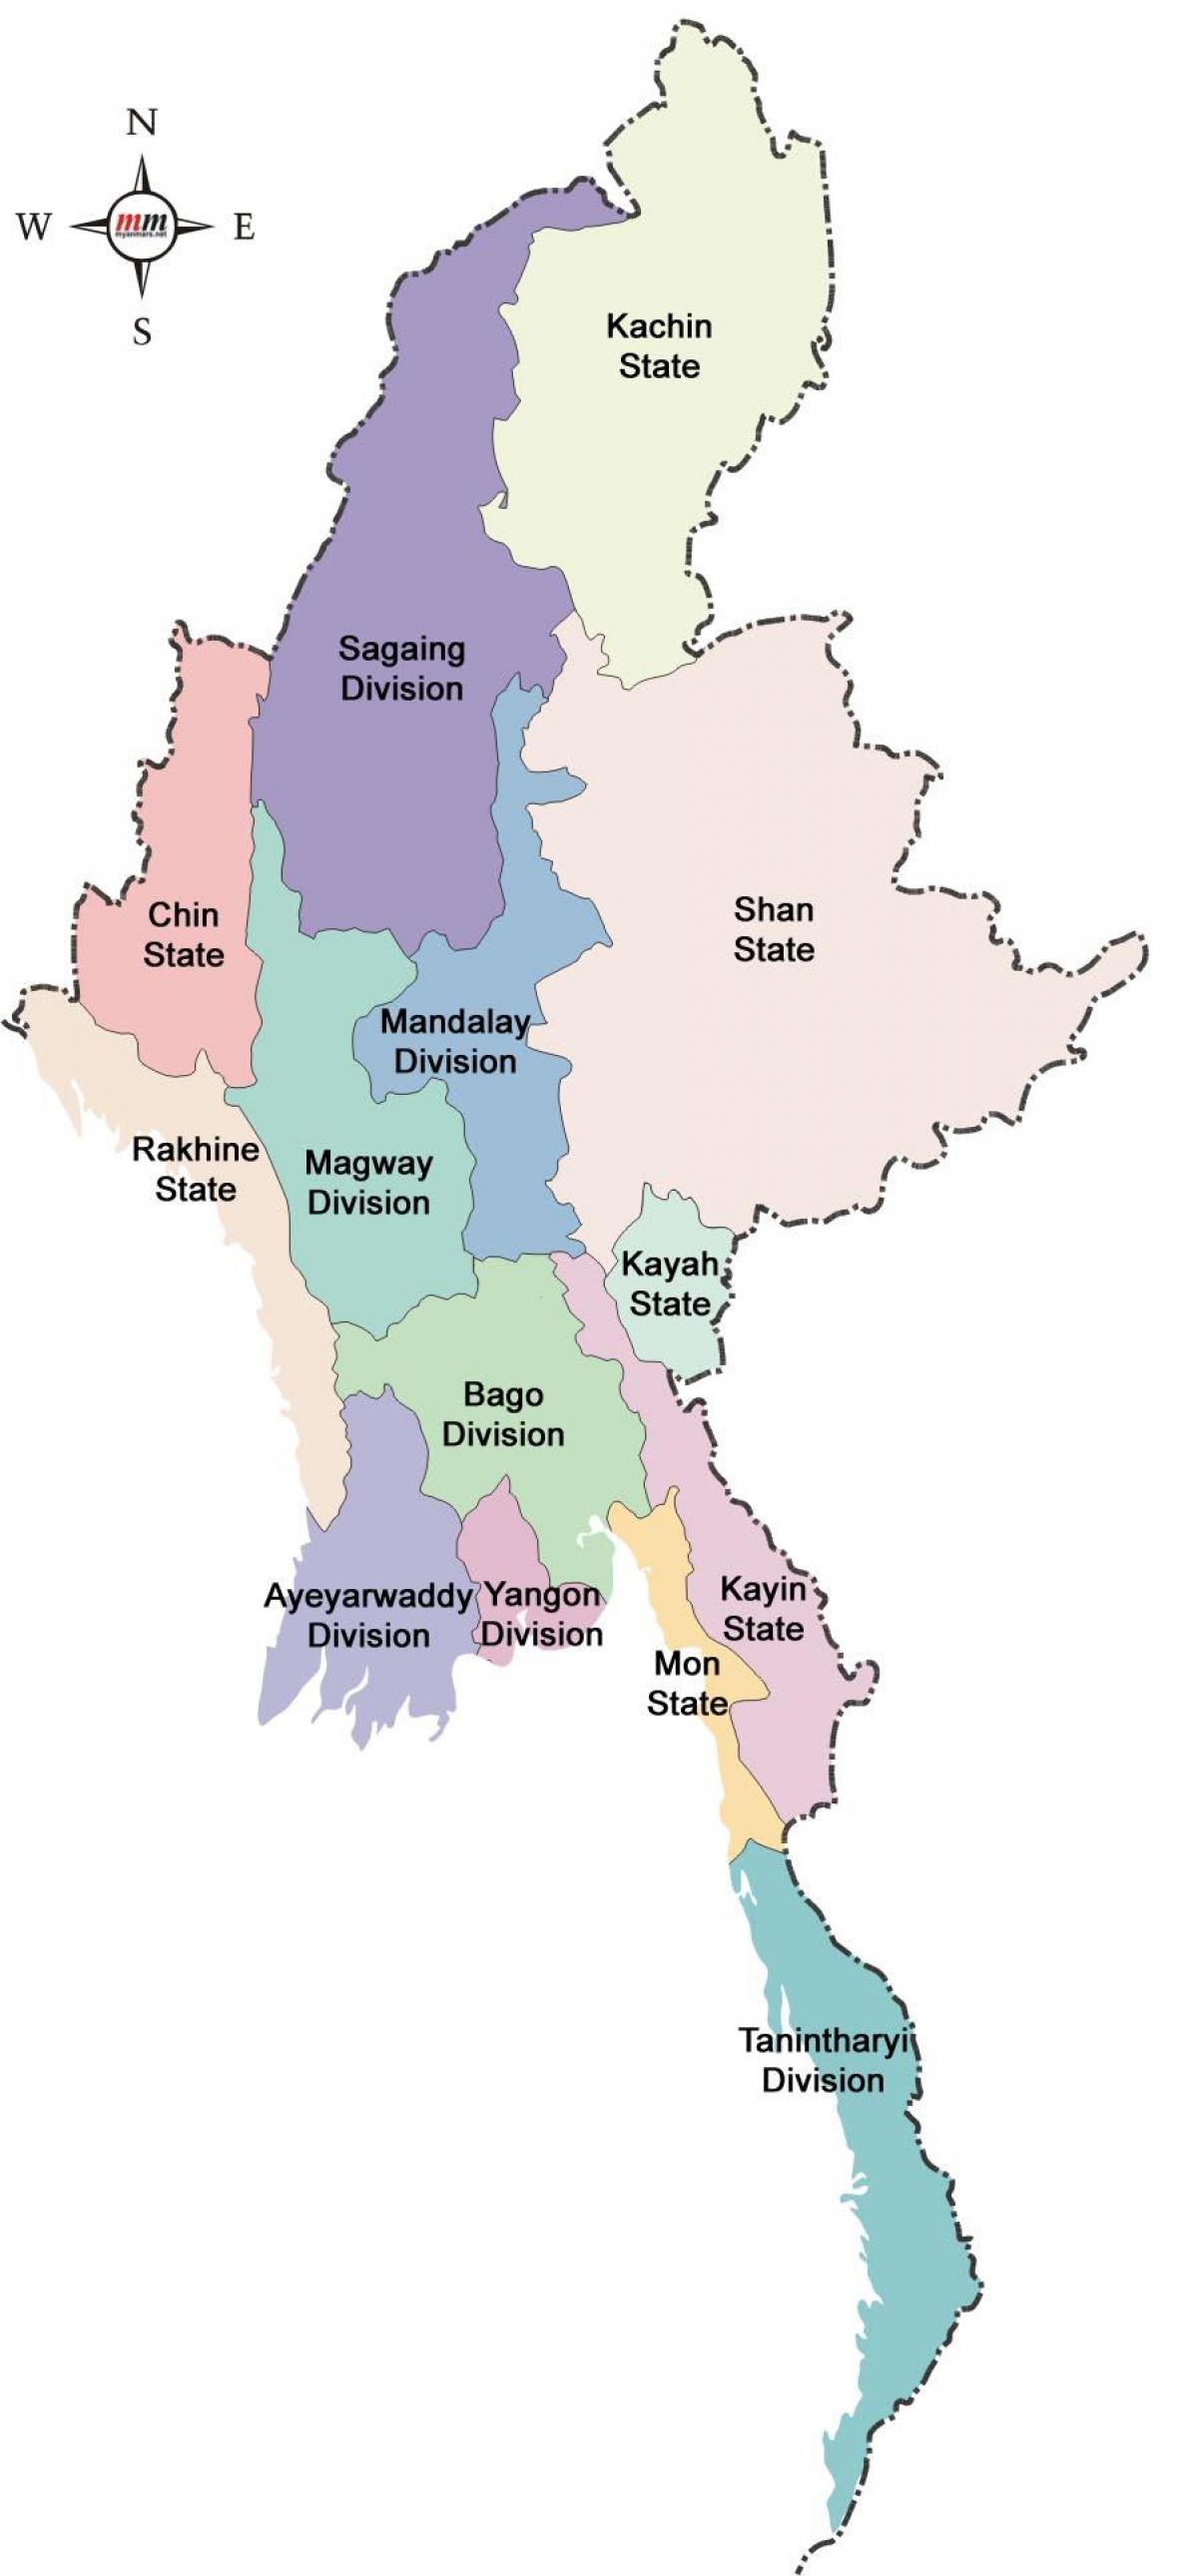 Karta Mianmar i države